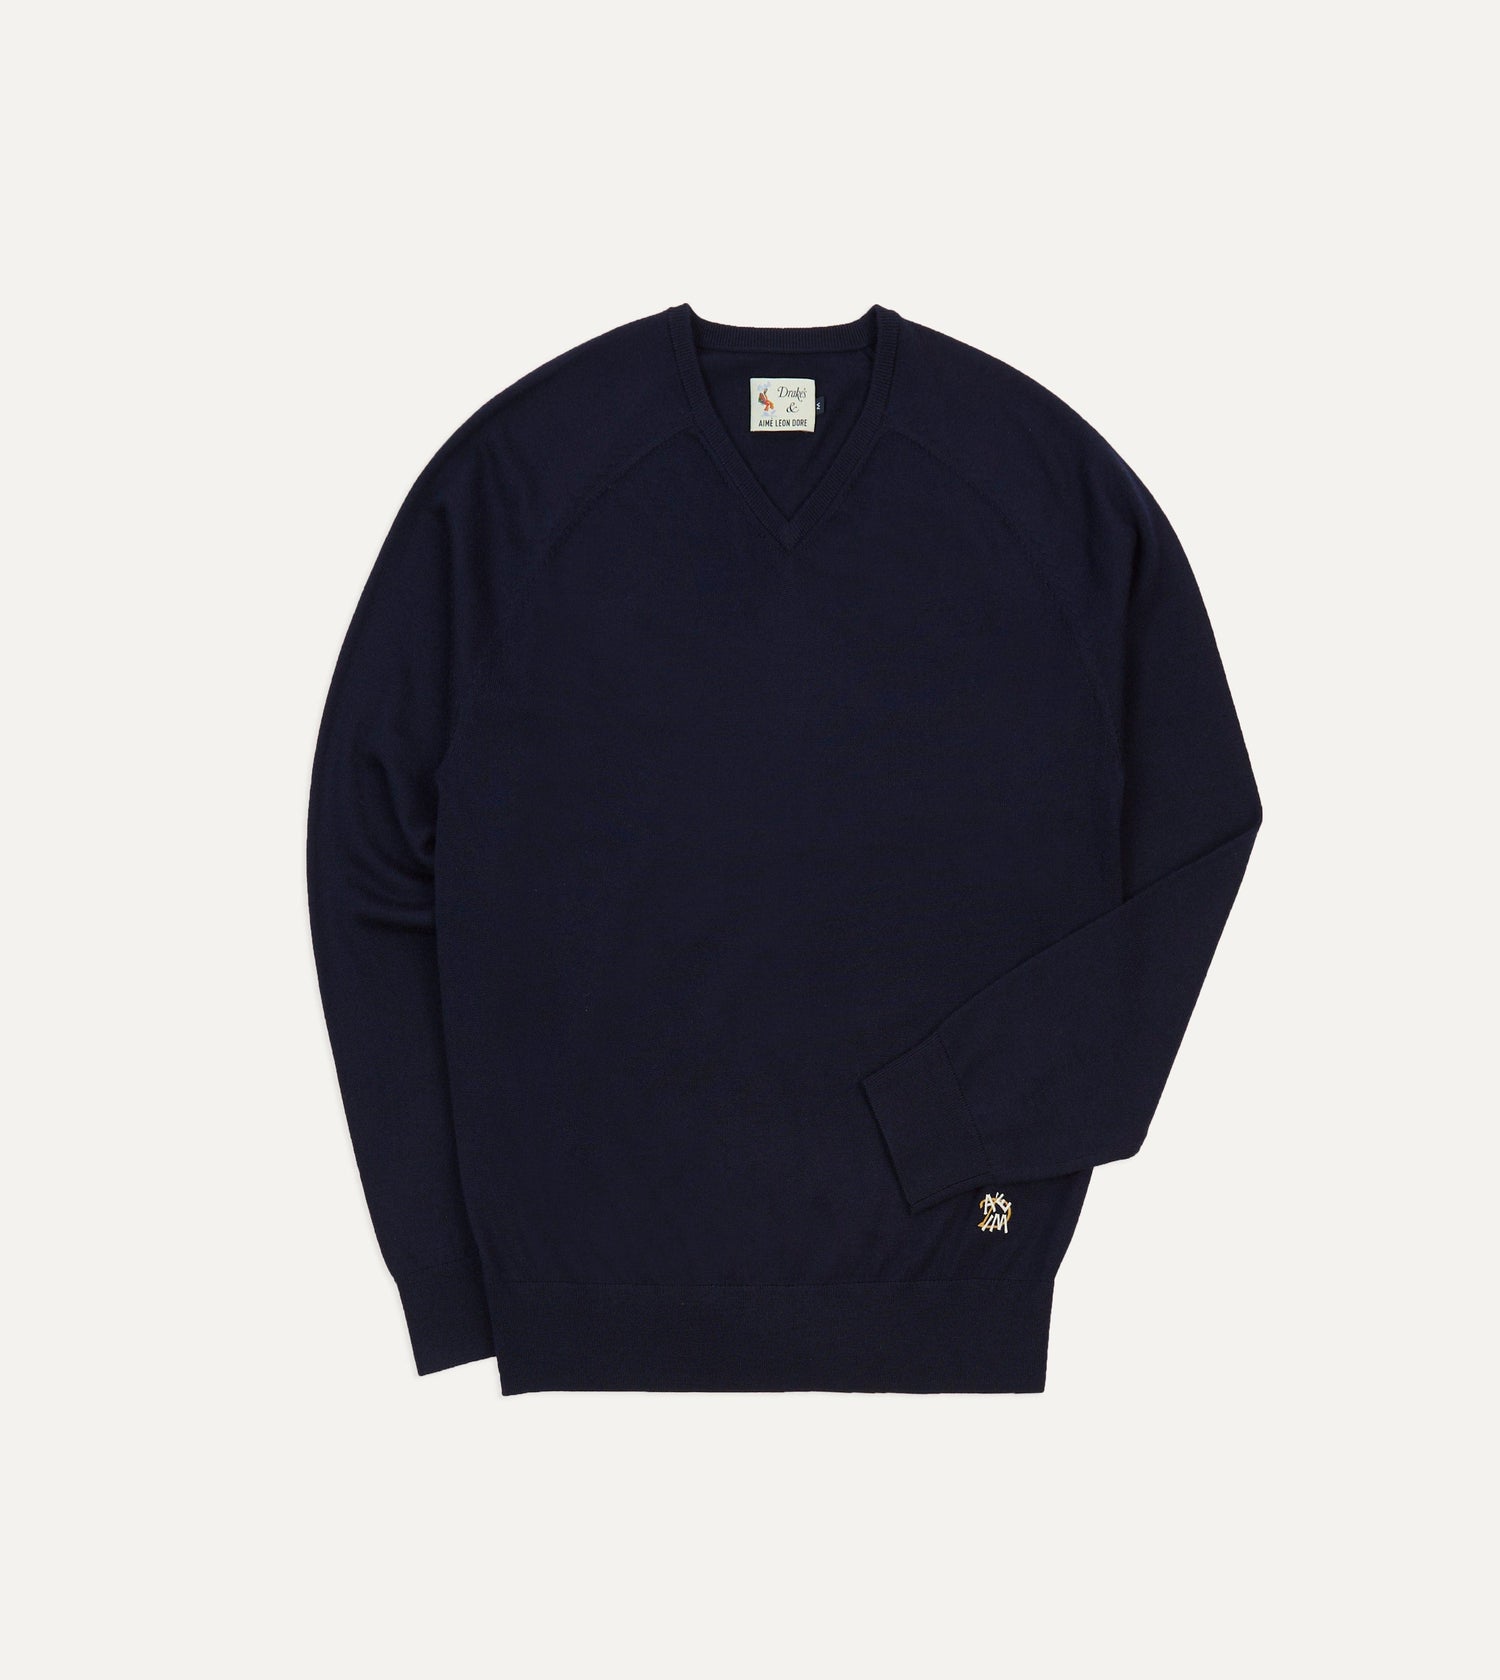 ALD / Drake's Intarsia Knit Sweater